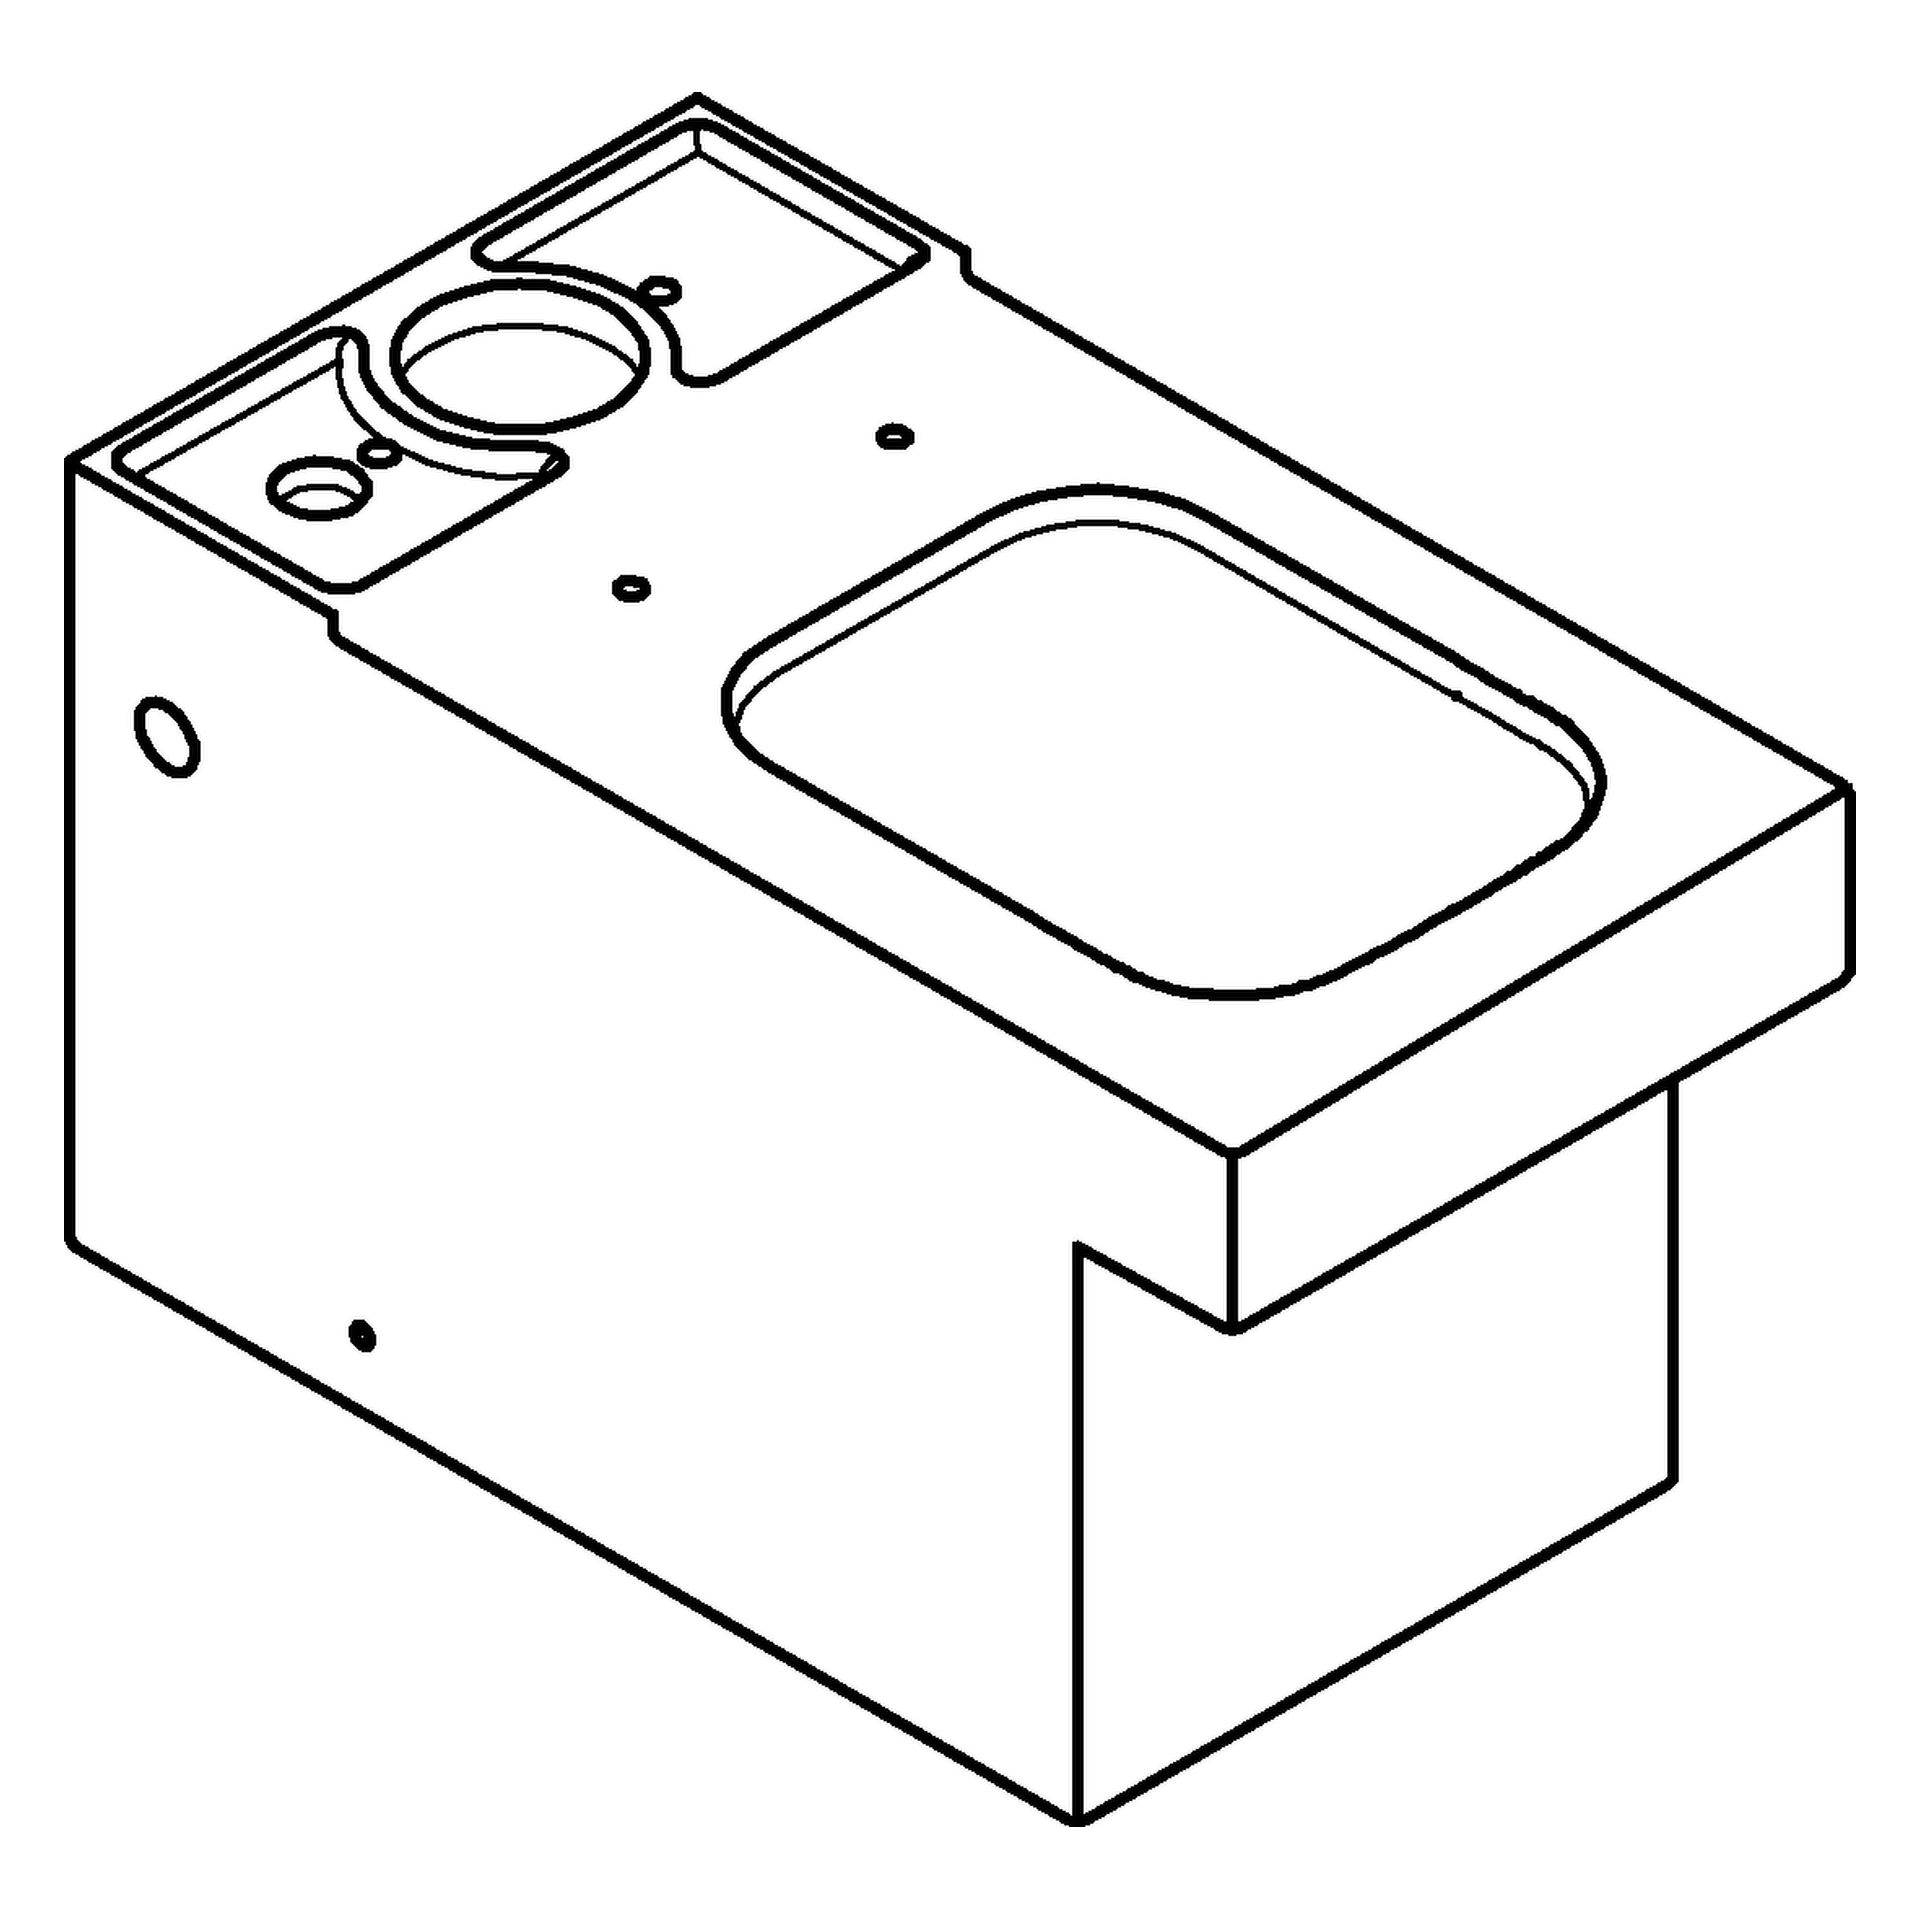 GROHE Stand-WC-Kombination Cube Keramik 39484_H, Abgang universal, spülrandlos, PureGuard Hygieneoberfläche, aus Sanitärkeramik, alpinweiß